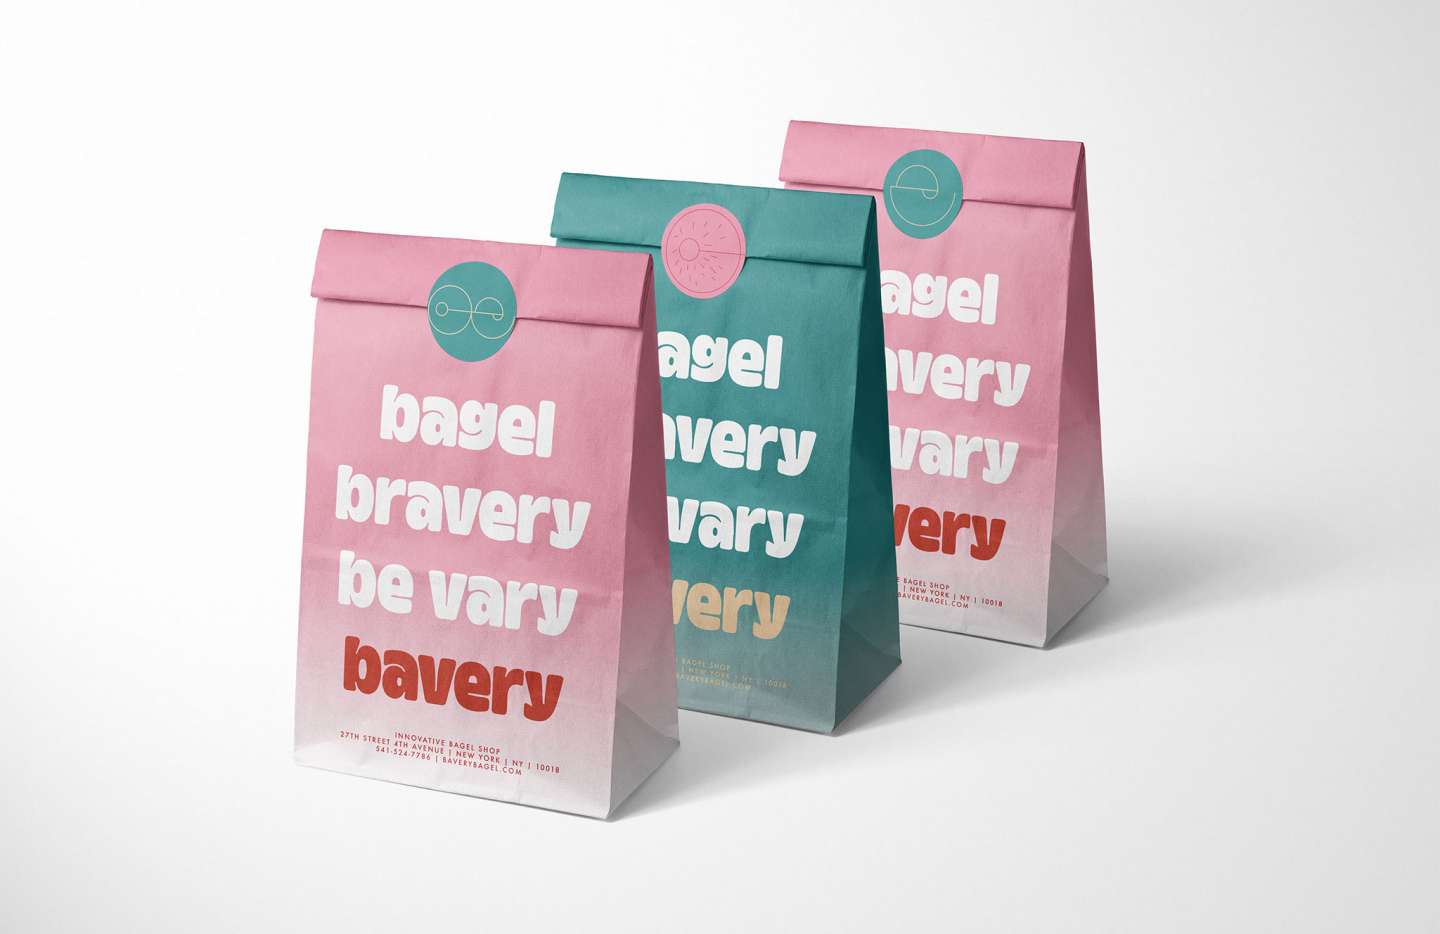 Bavery Bagel Shop Branding